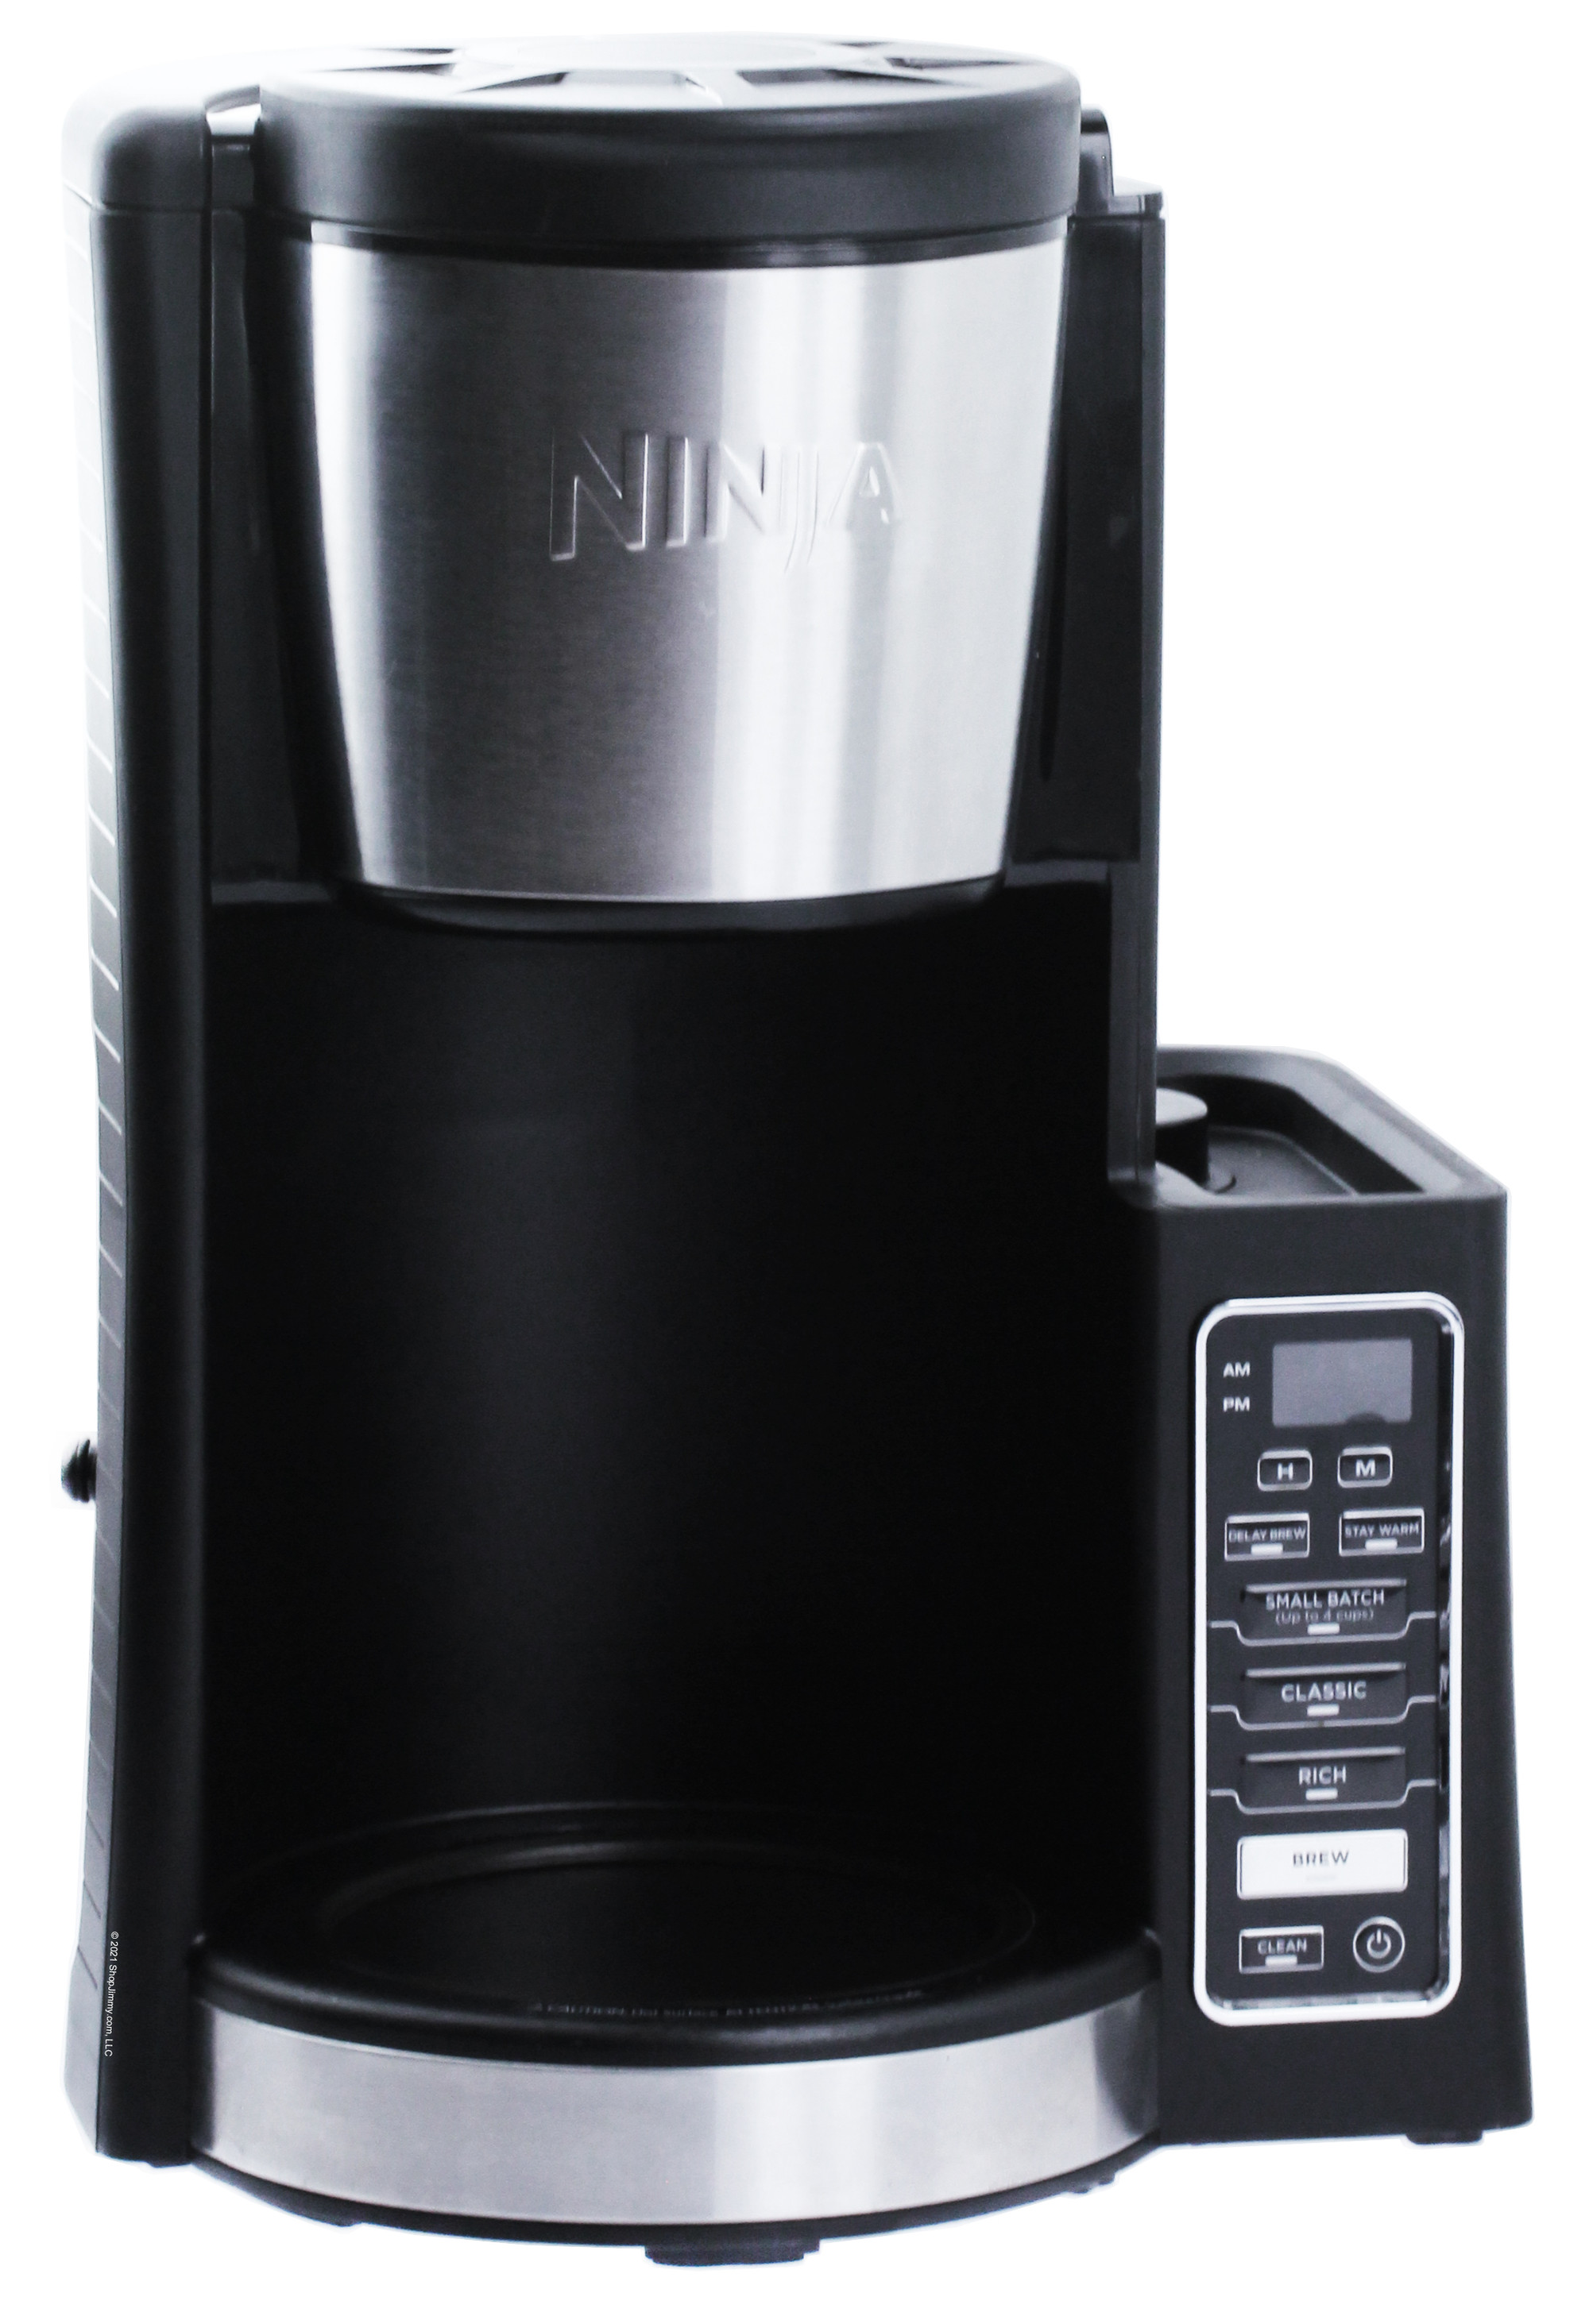 Brand New* Ninja 12 Cup Programmable Coffee Brewer Model: CE251